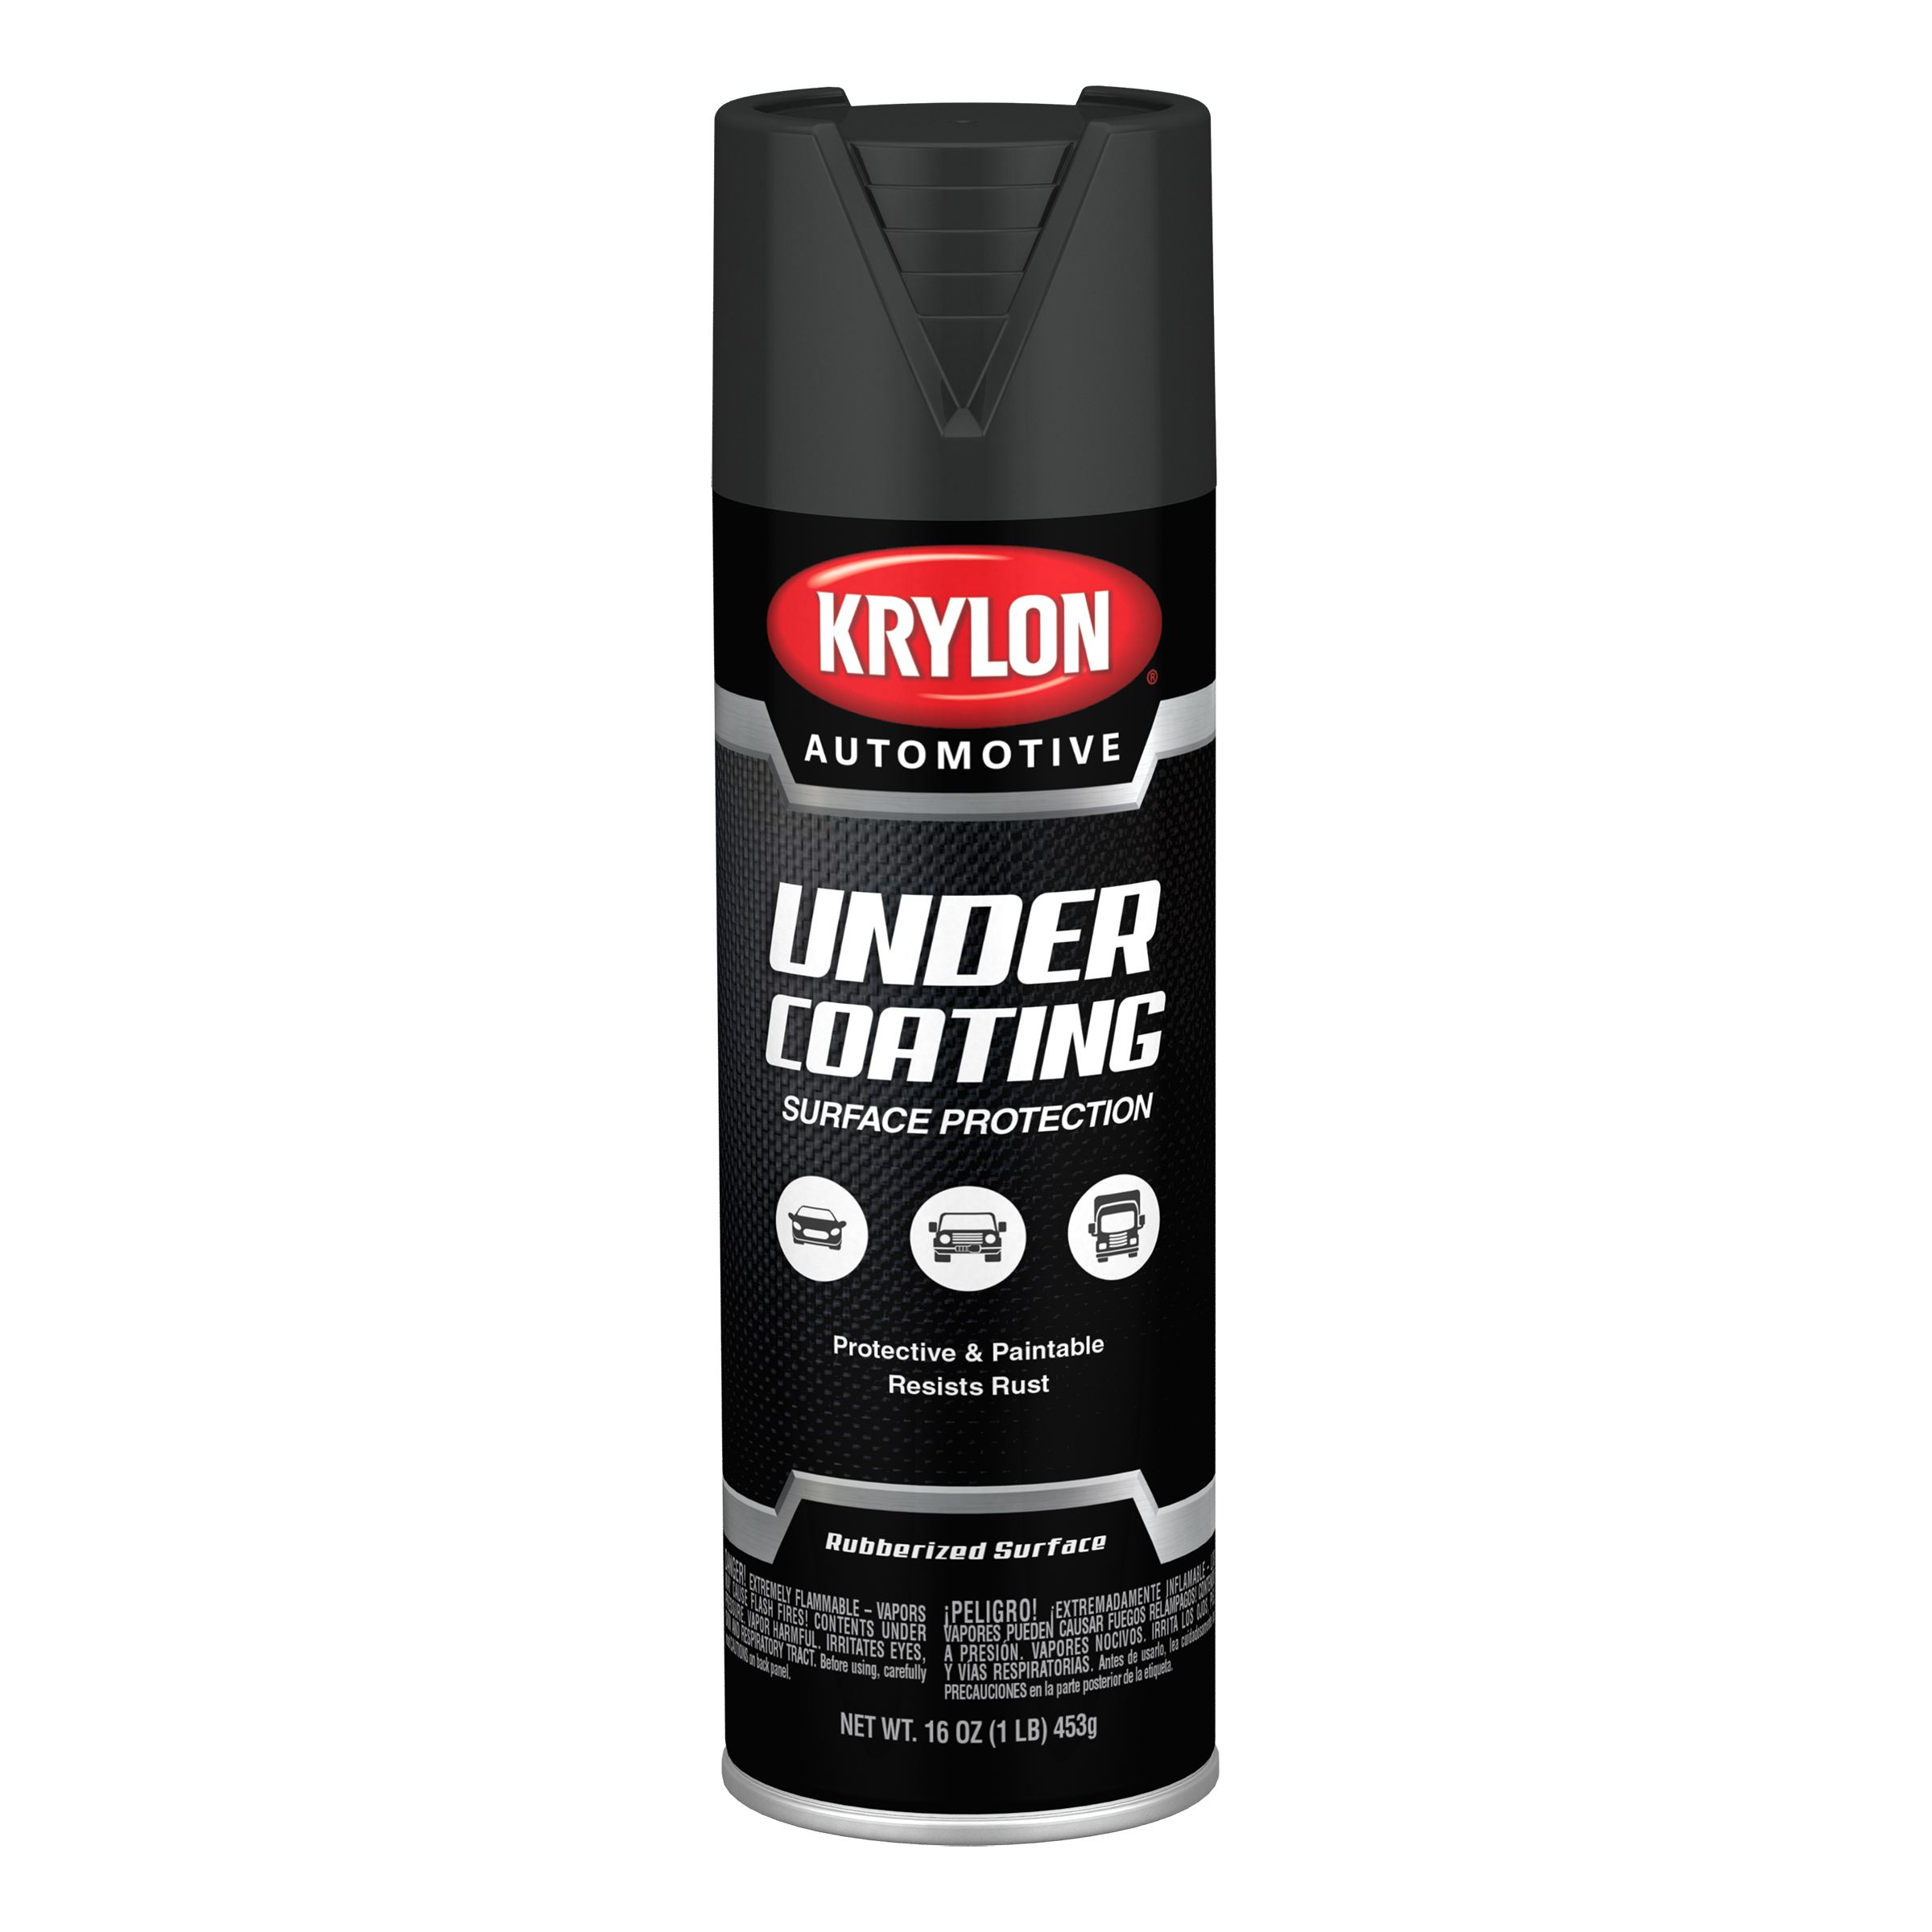 Krylon Automotive Undercoating